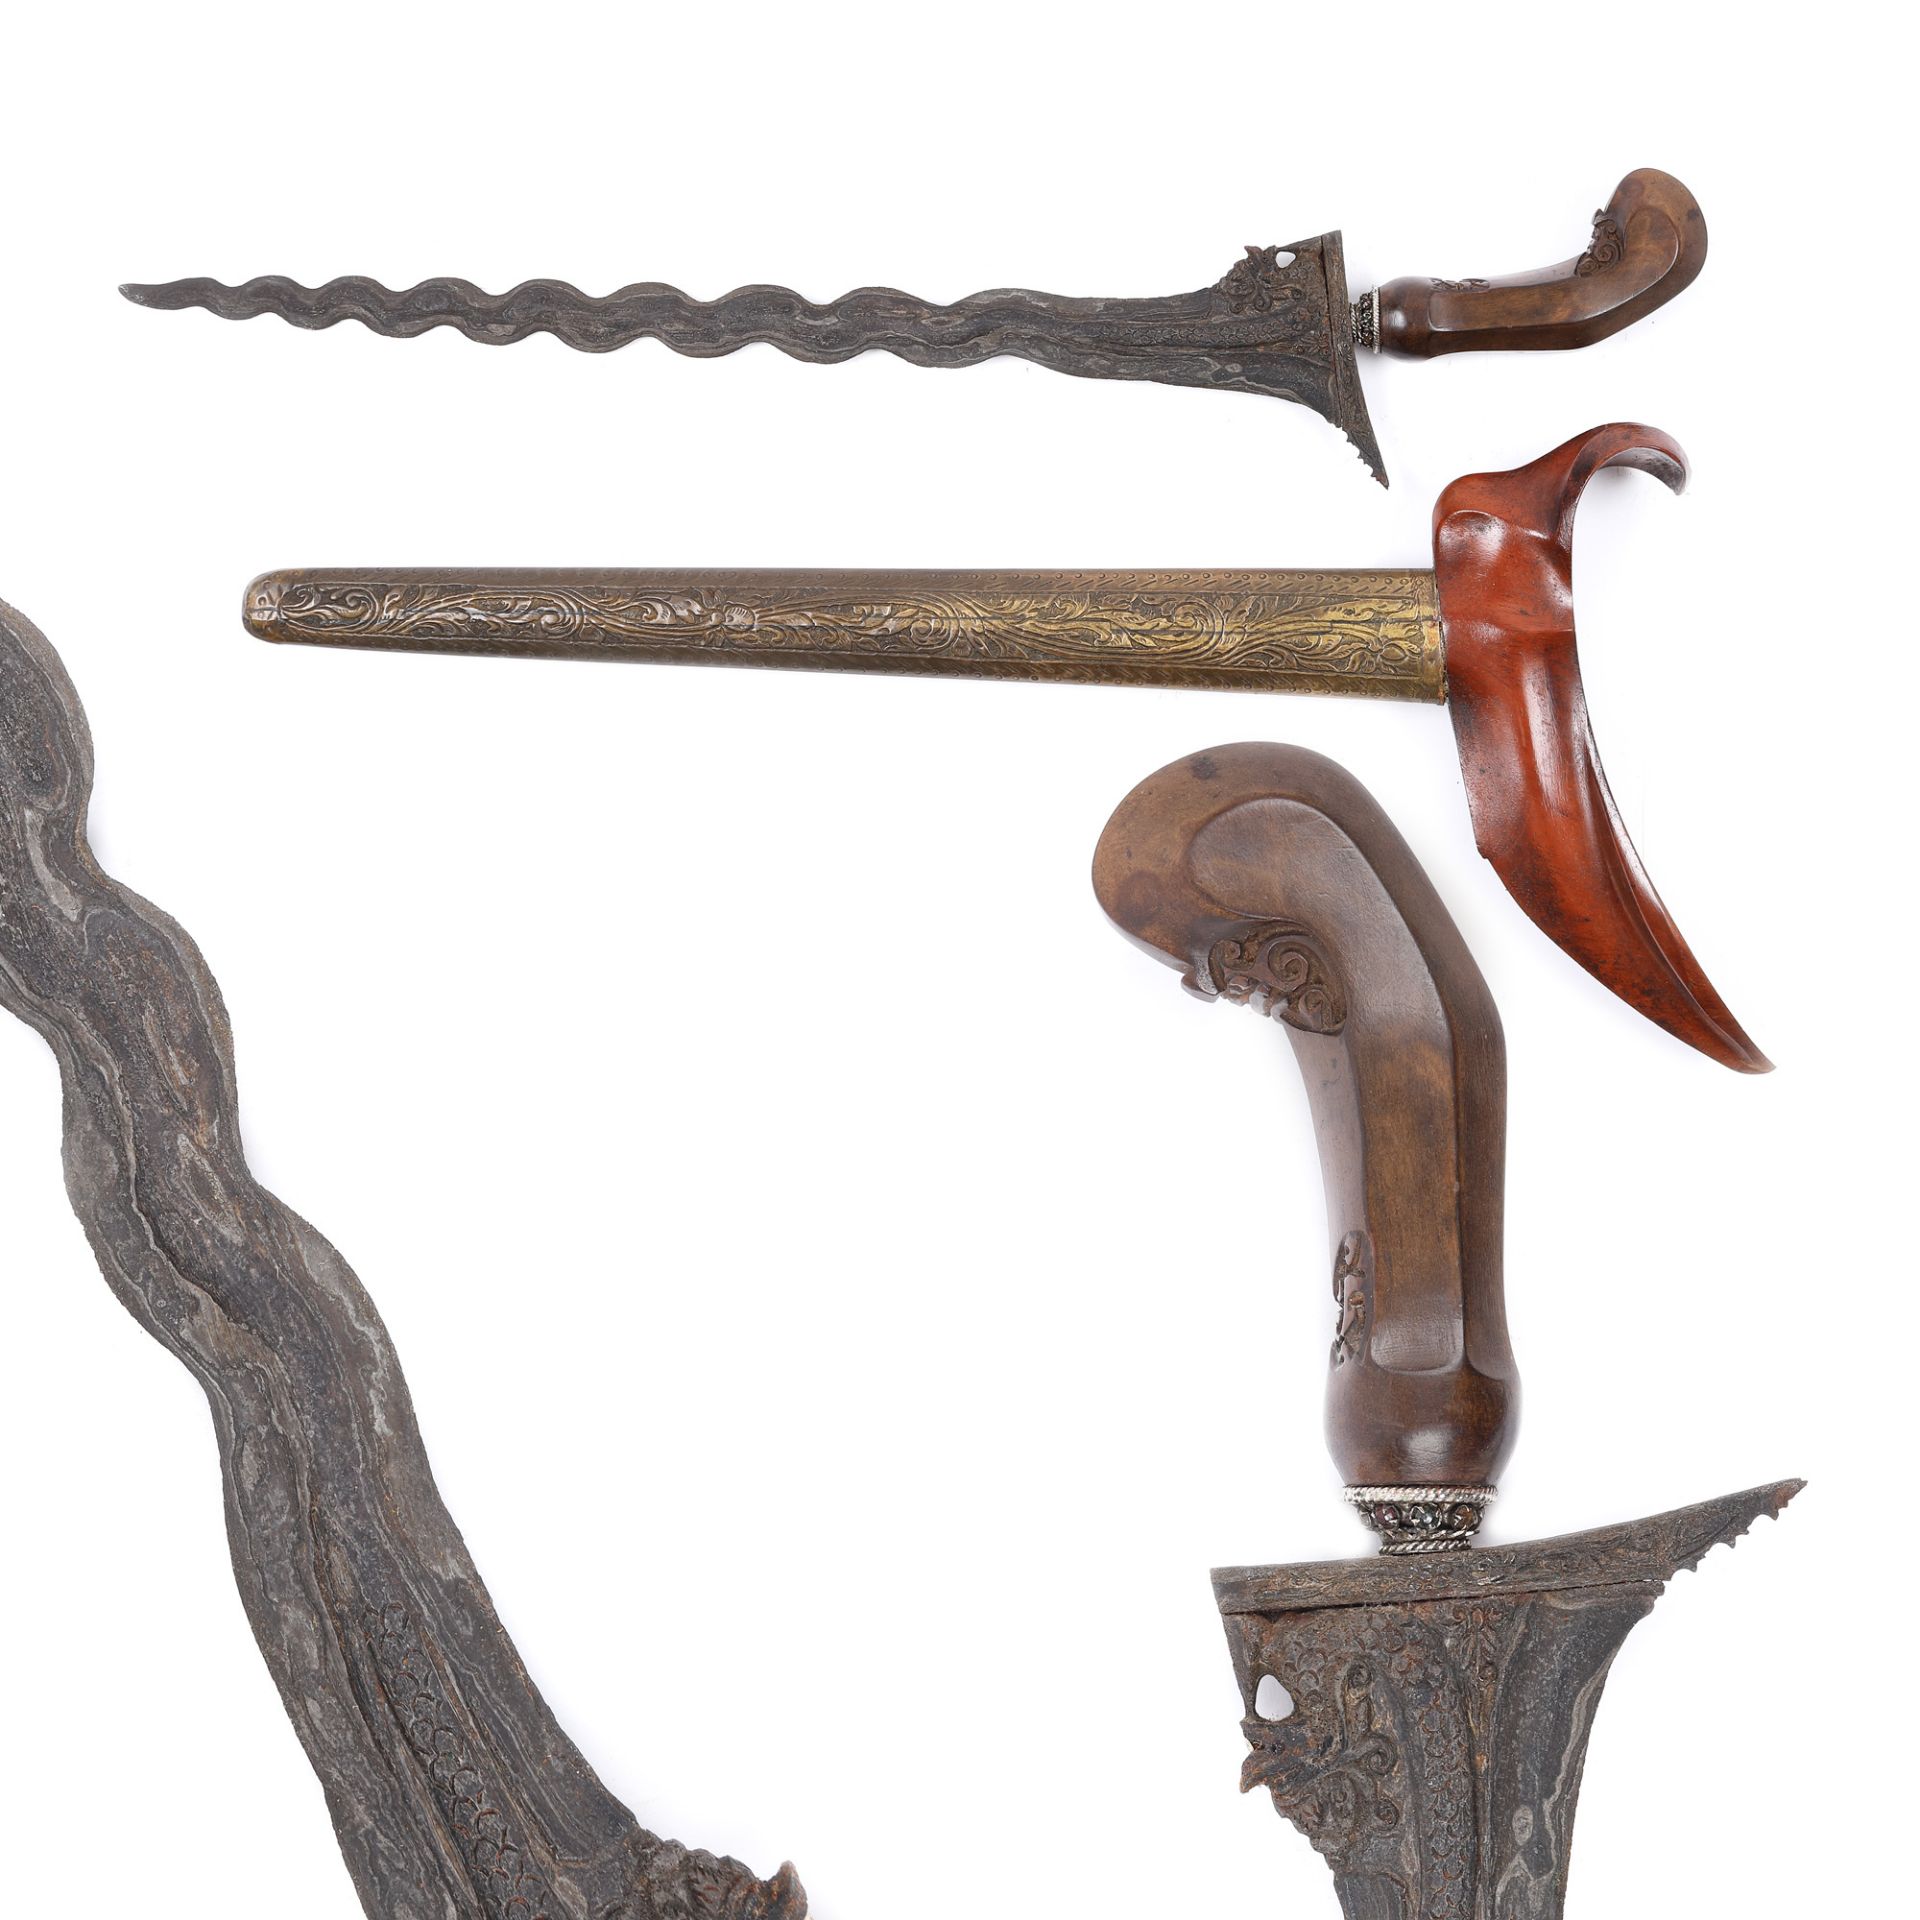 Kris dagger, with sheath, Bali, Indonesia, late 19th century